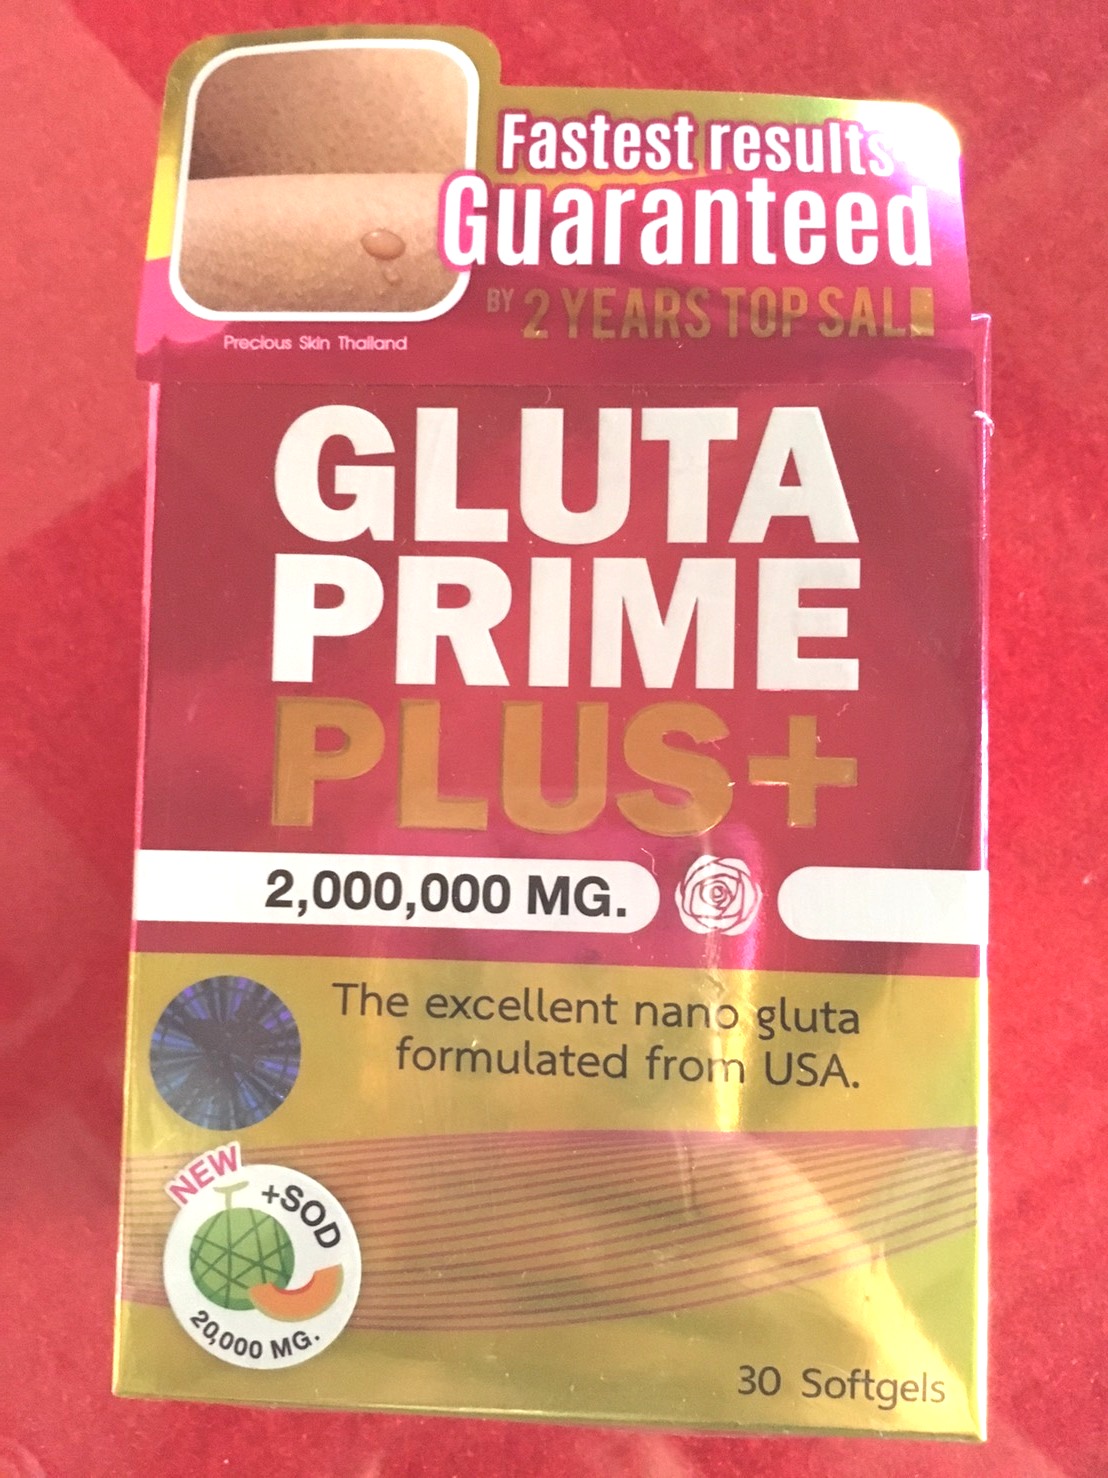 Gluta Prime Plus New Box by www.ccthaitown.com